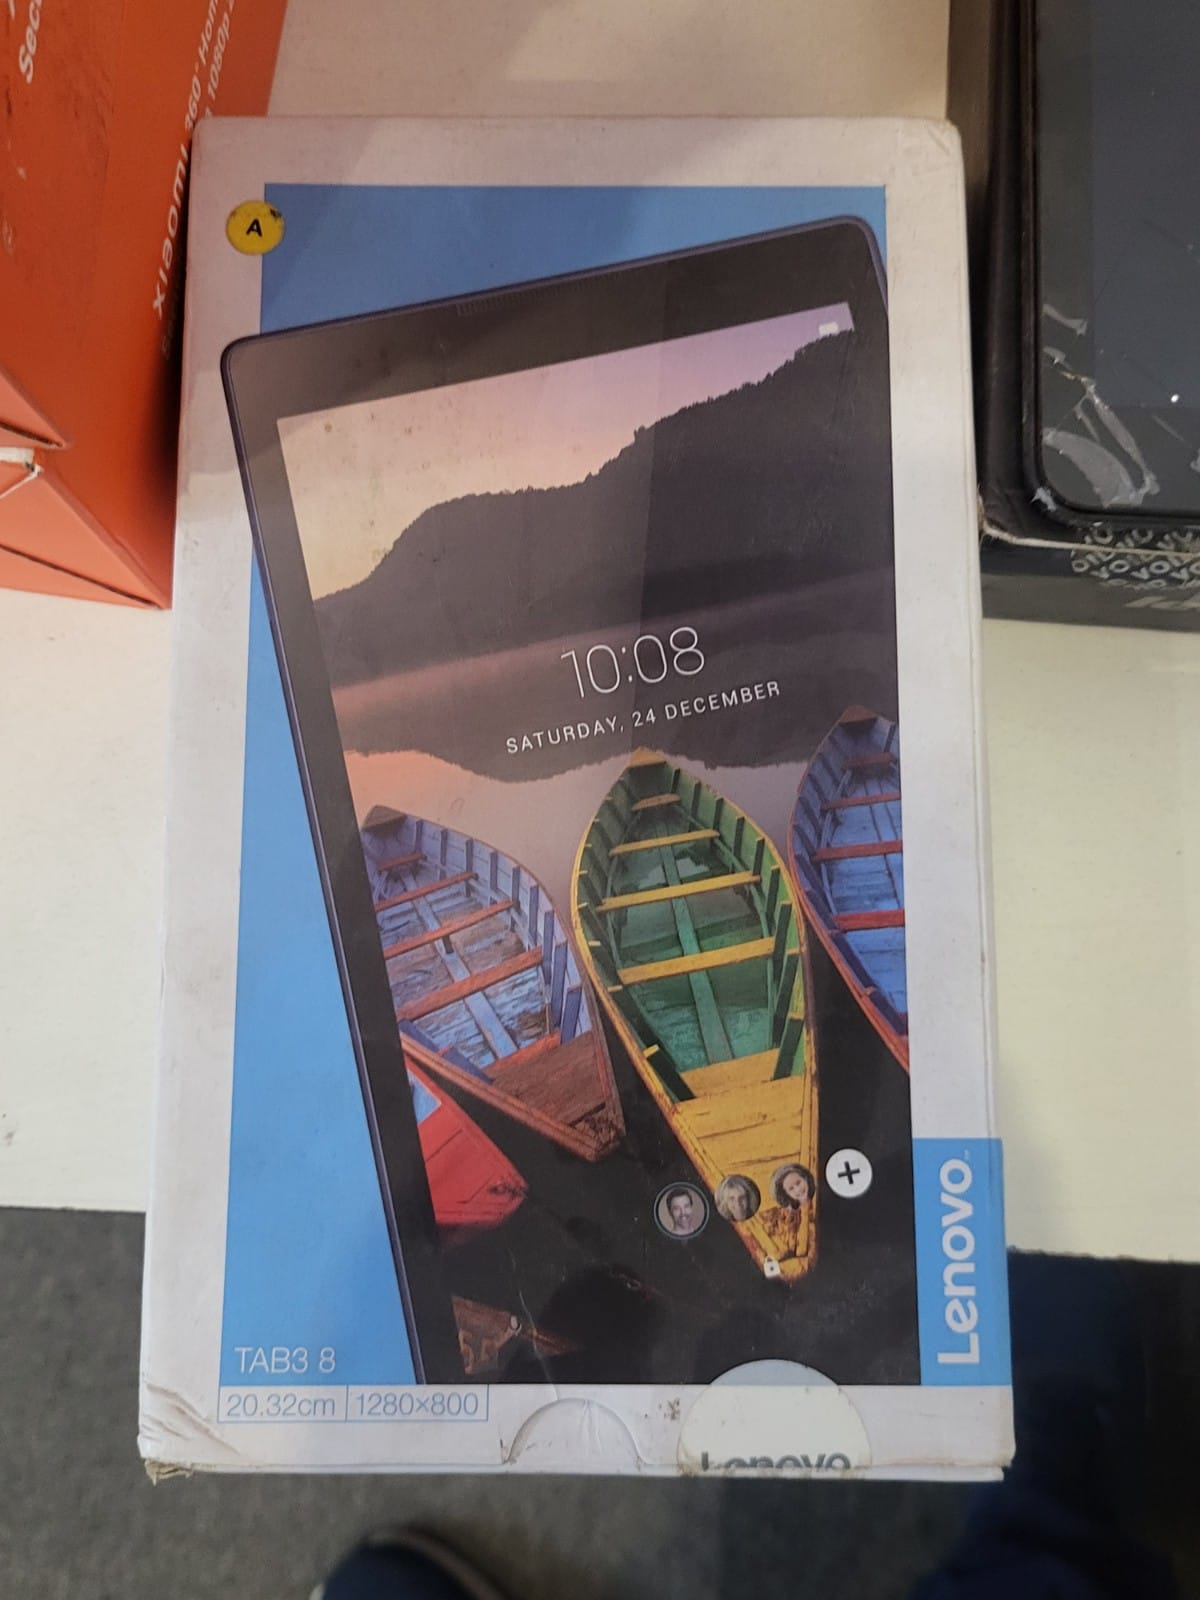 Open Box Unused Lenovo Tab3 8 Tablet 8 inch 16GB Wi-Fi + 4G LTE Voice Calling